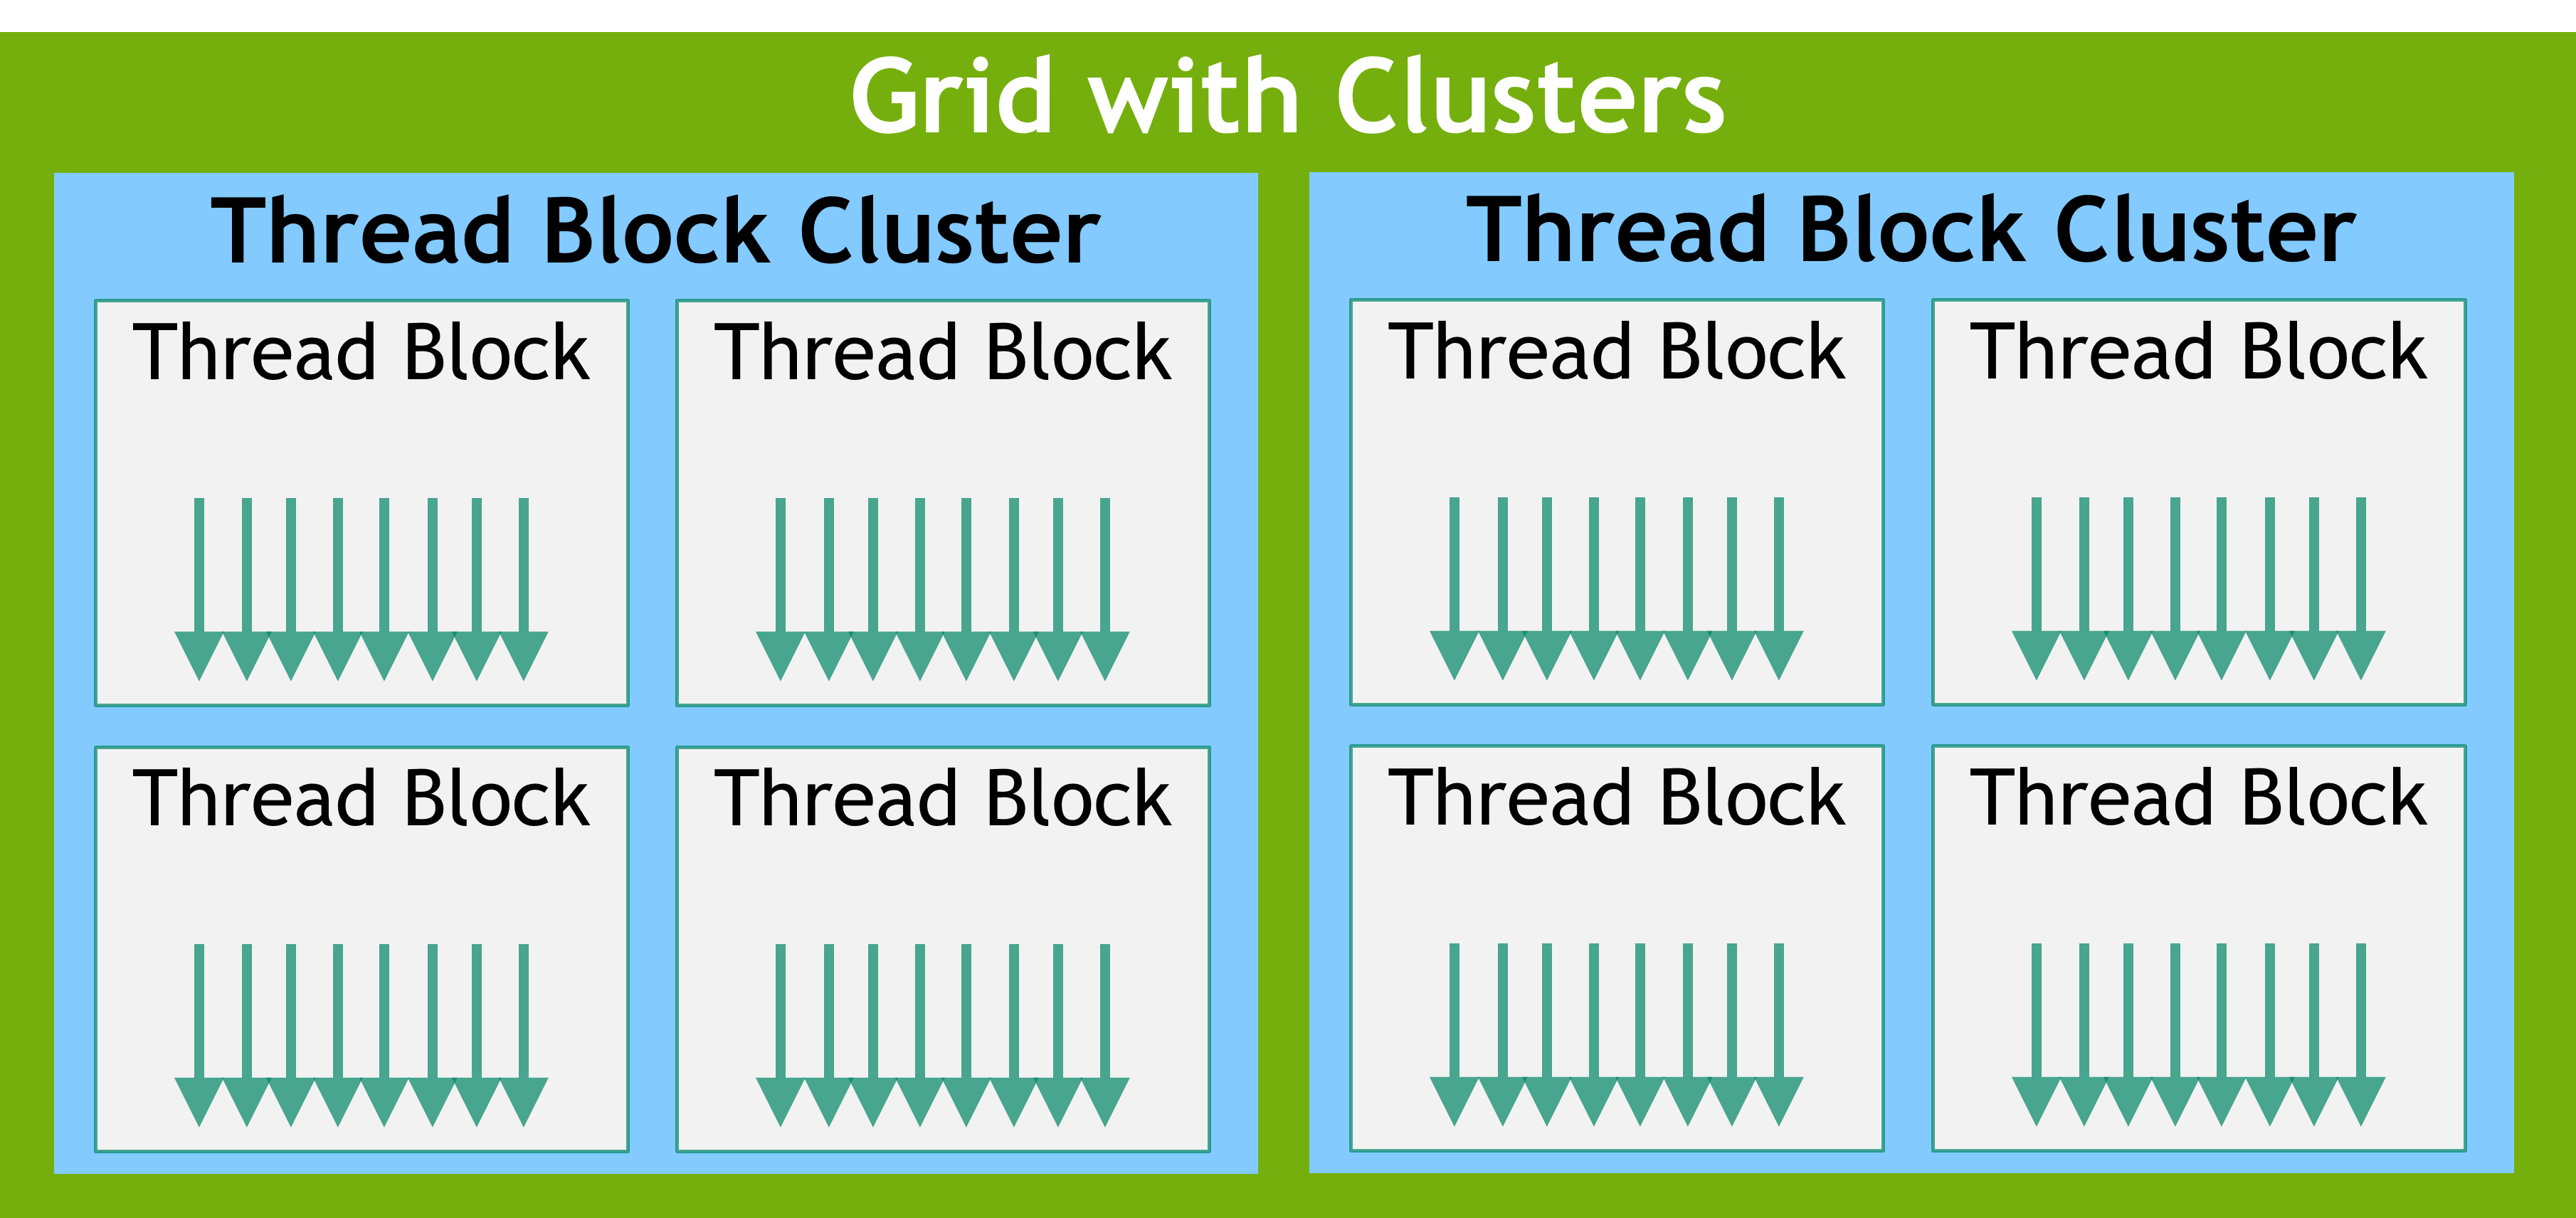 Grid of Thread Block Clusters